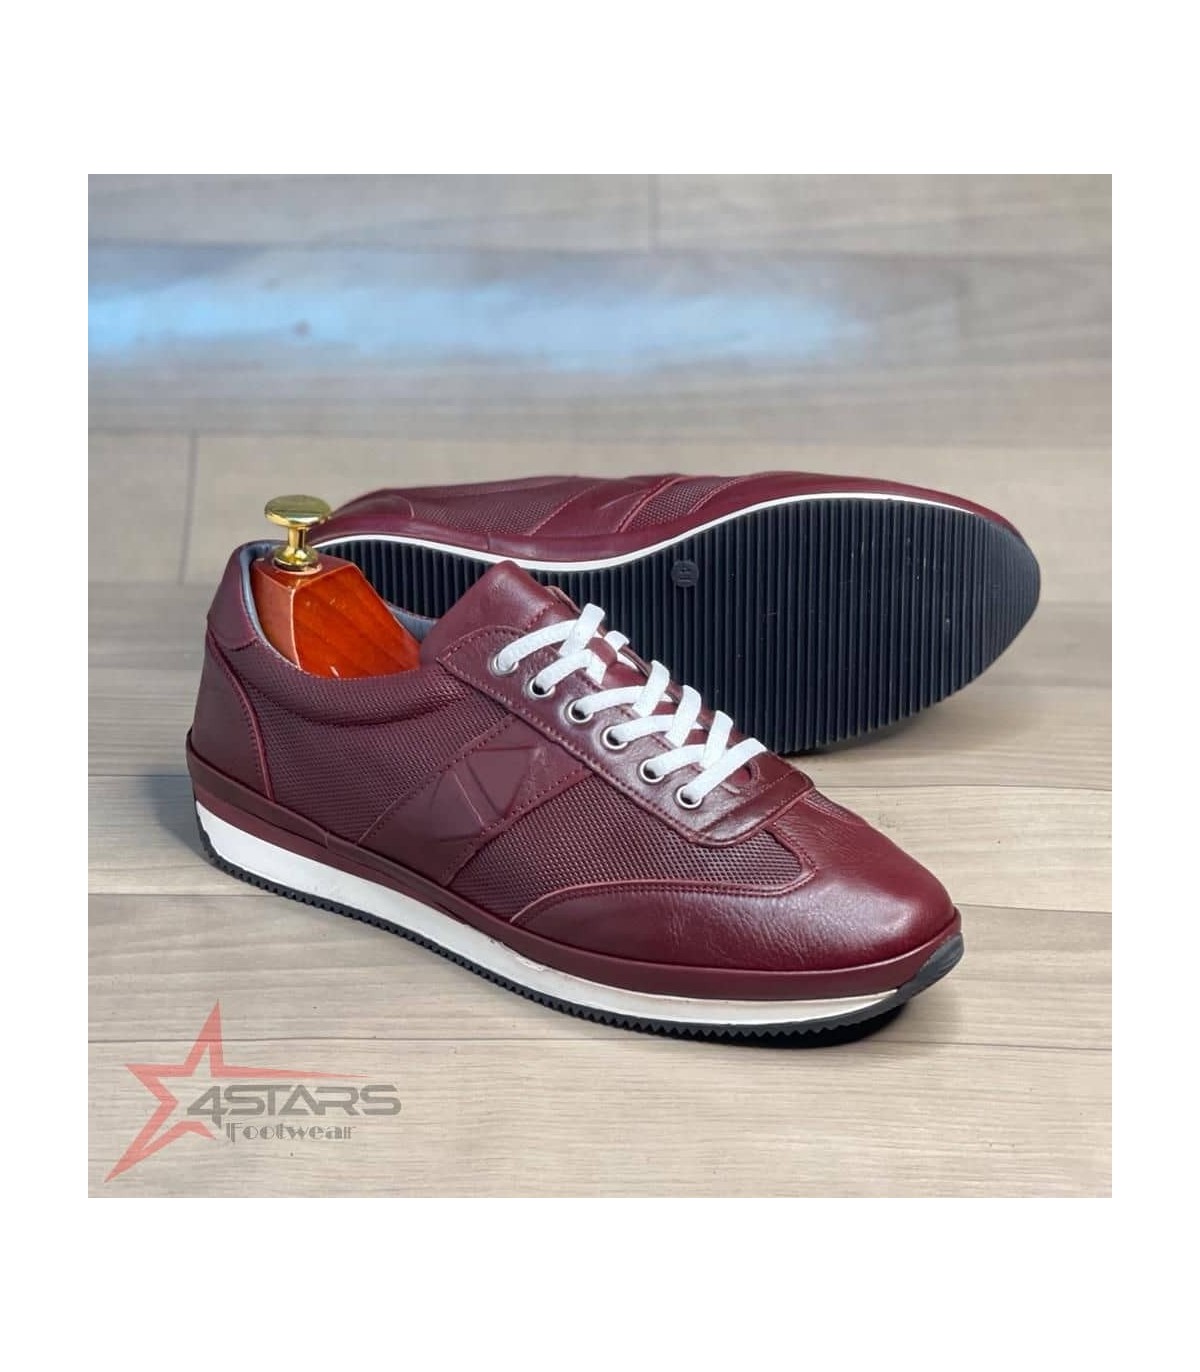 Ducavelli Men's Leather Sneakers - Wine Red